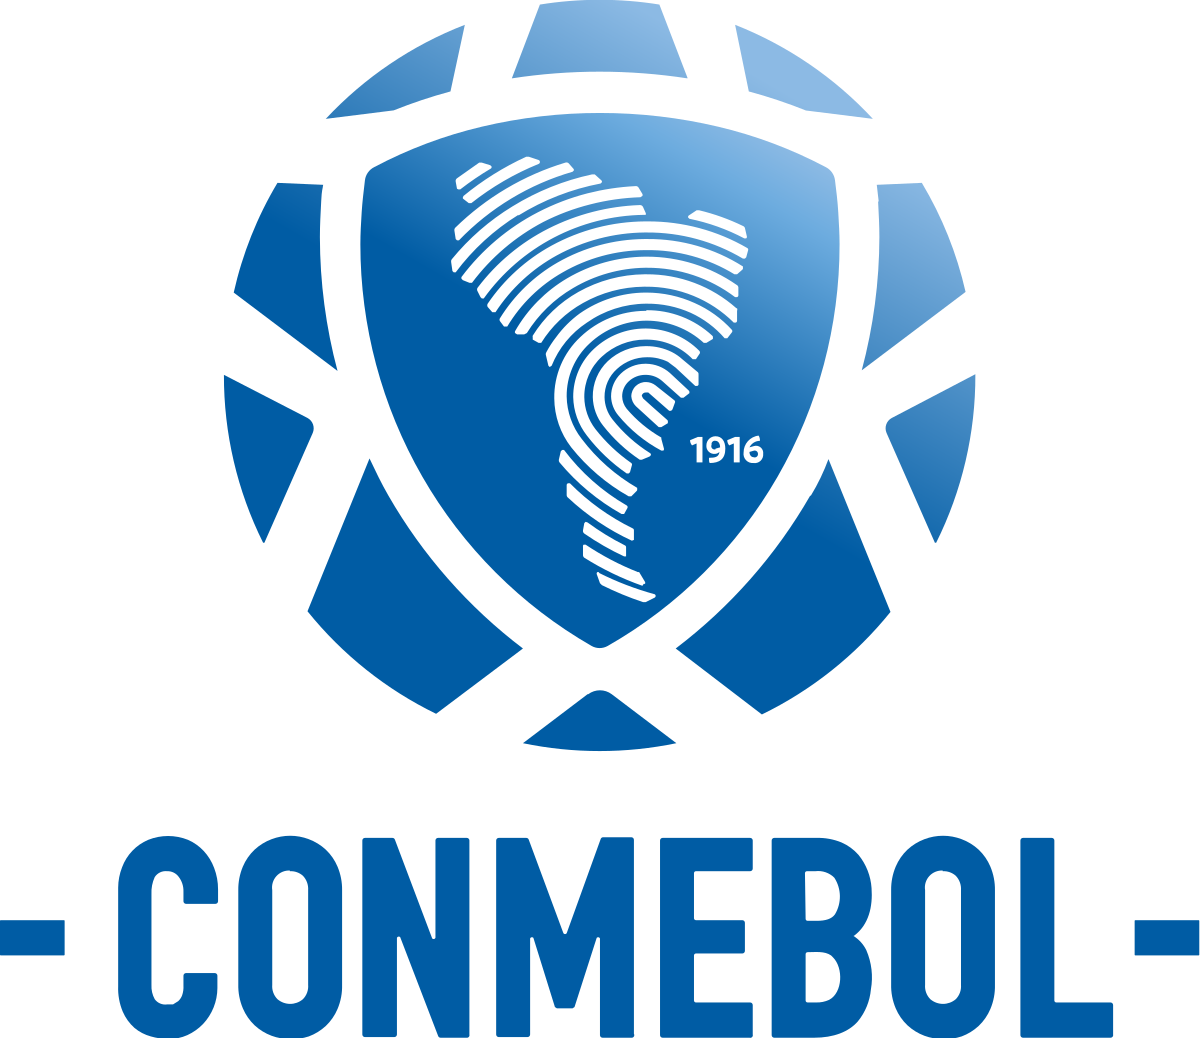 CONMEBOL - Wikipedia